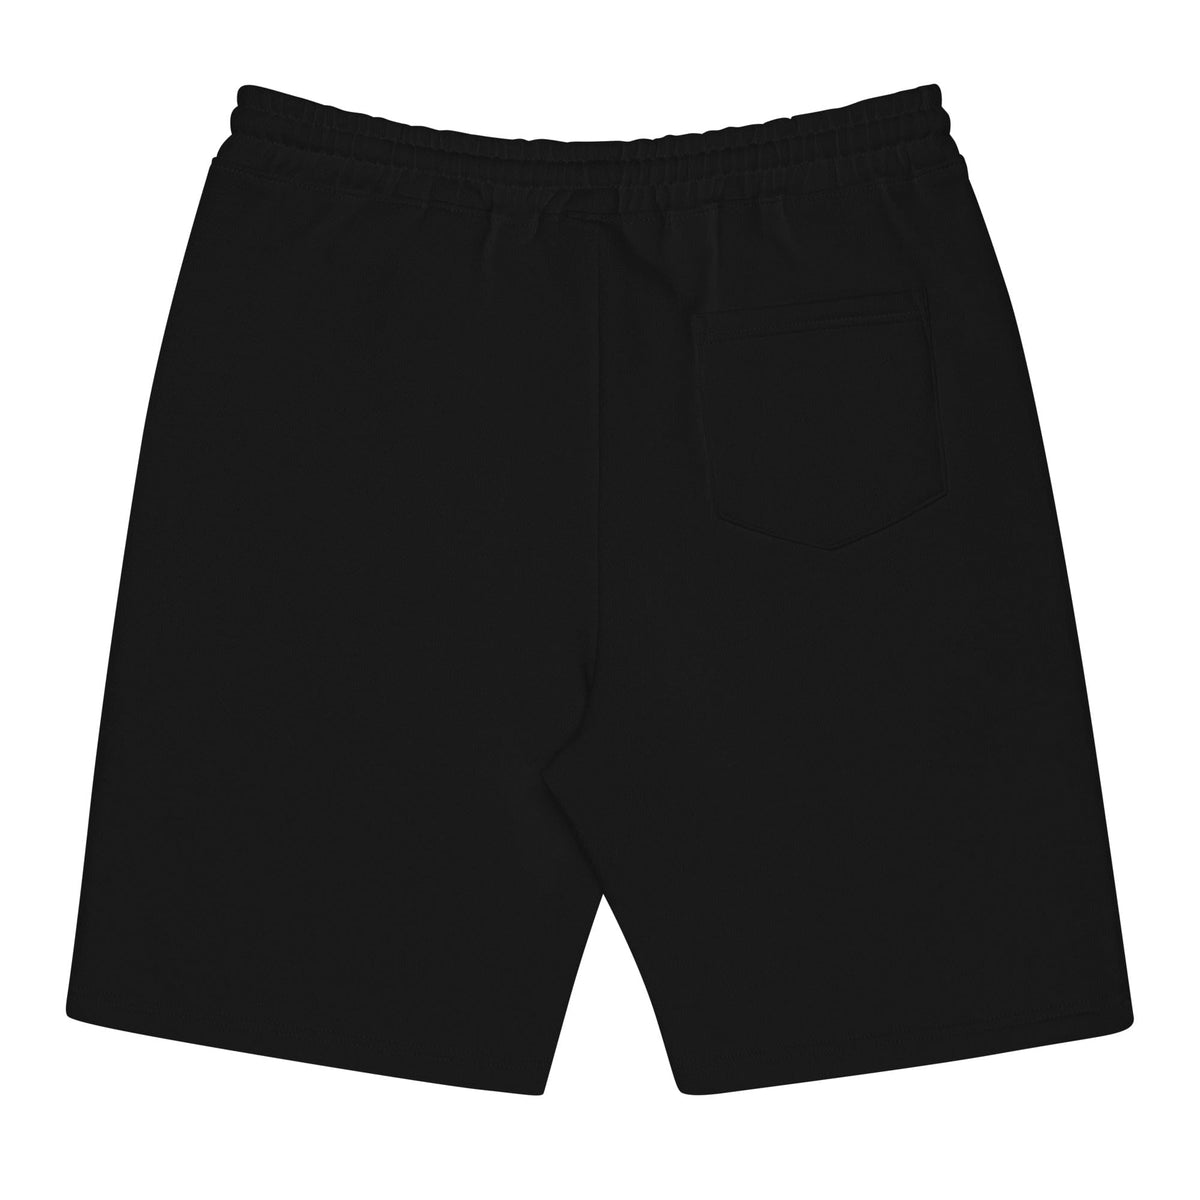 Hanz fleece shorts Black gym shorts